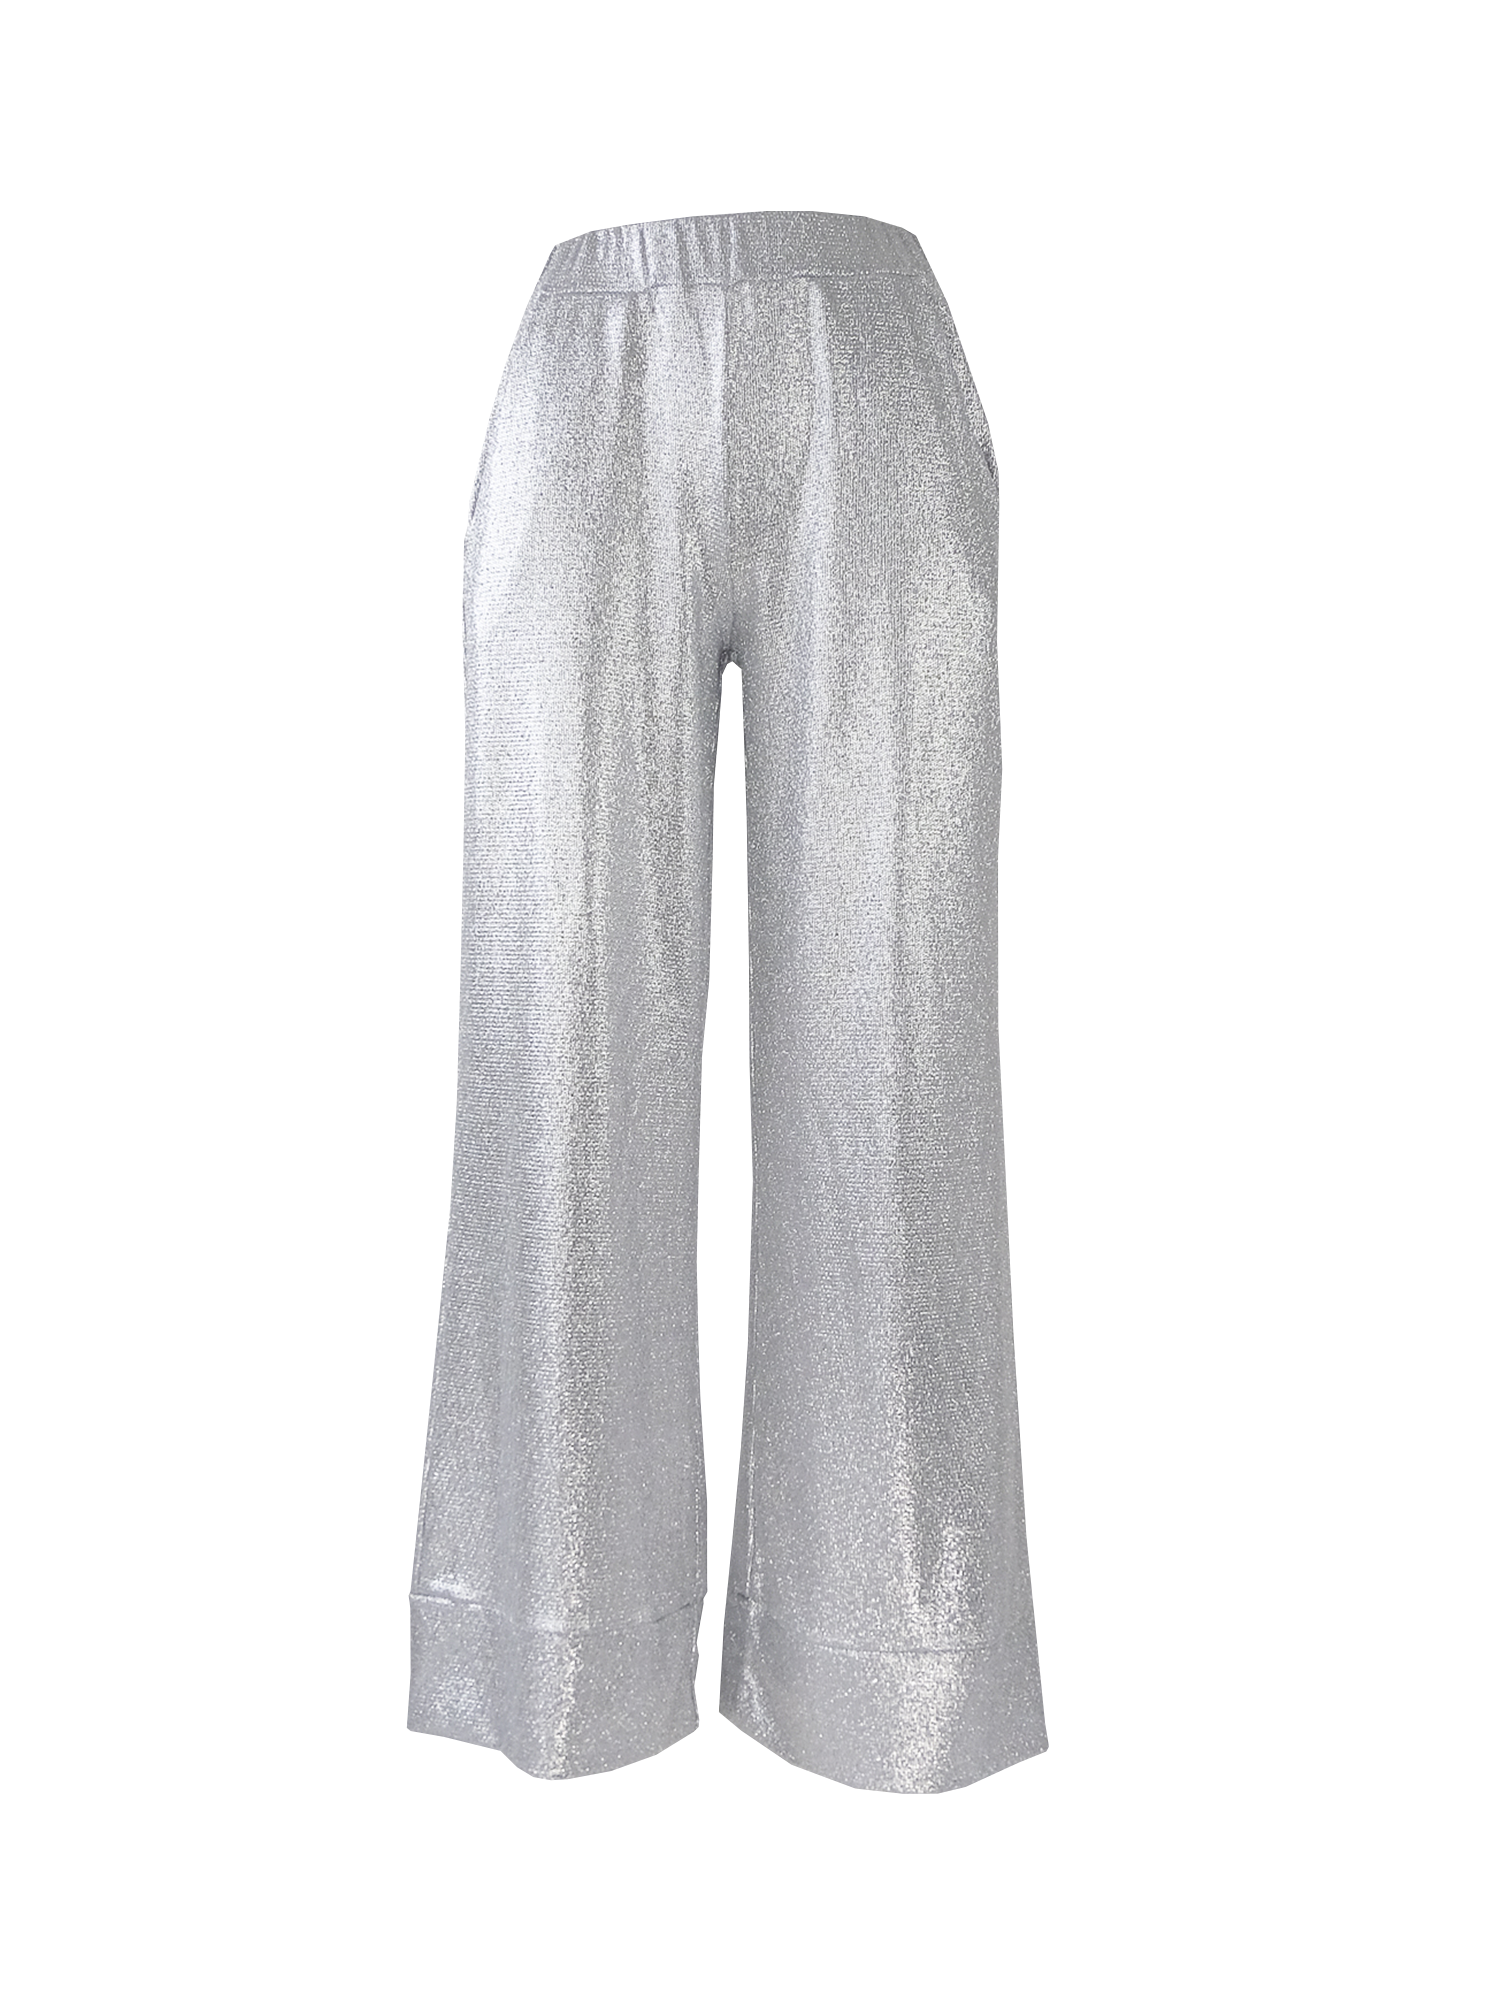 AIDA - silver lurex palazzo pants